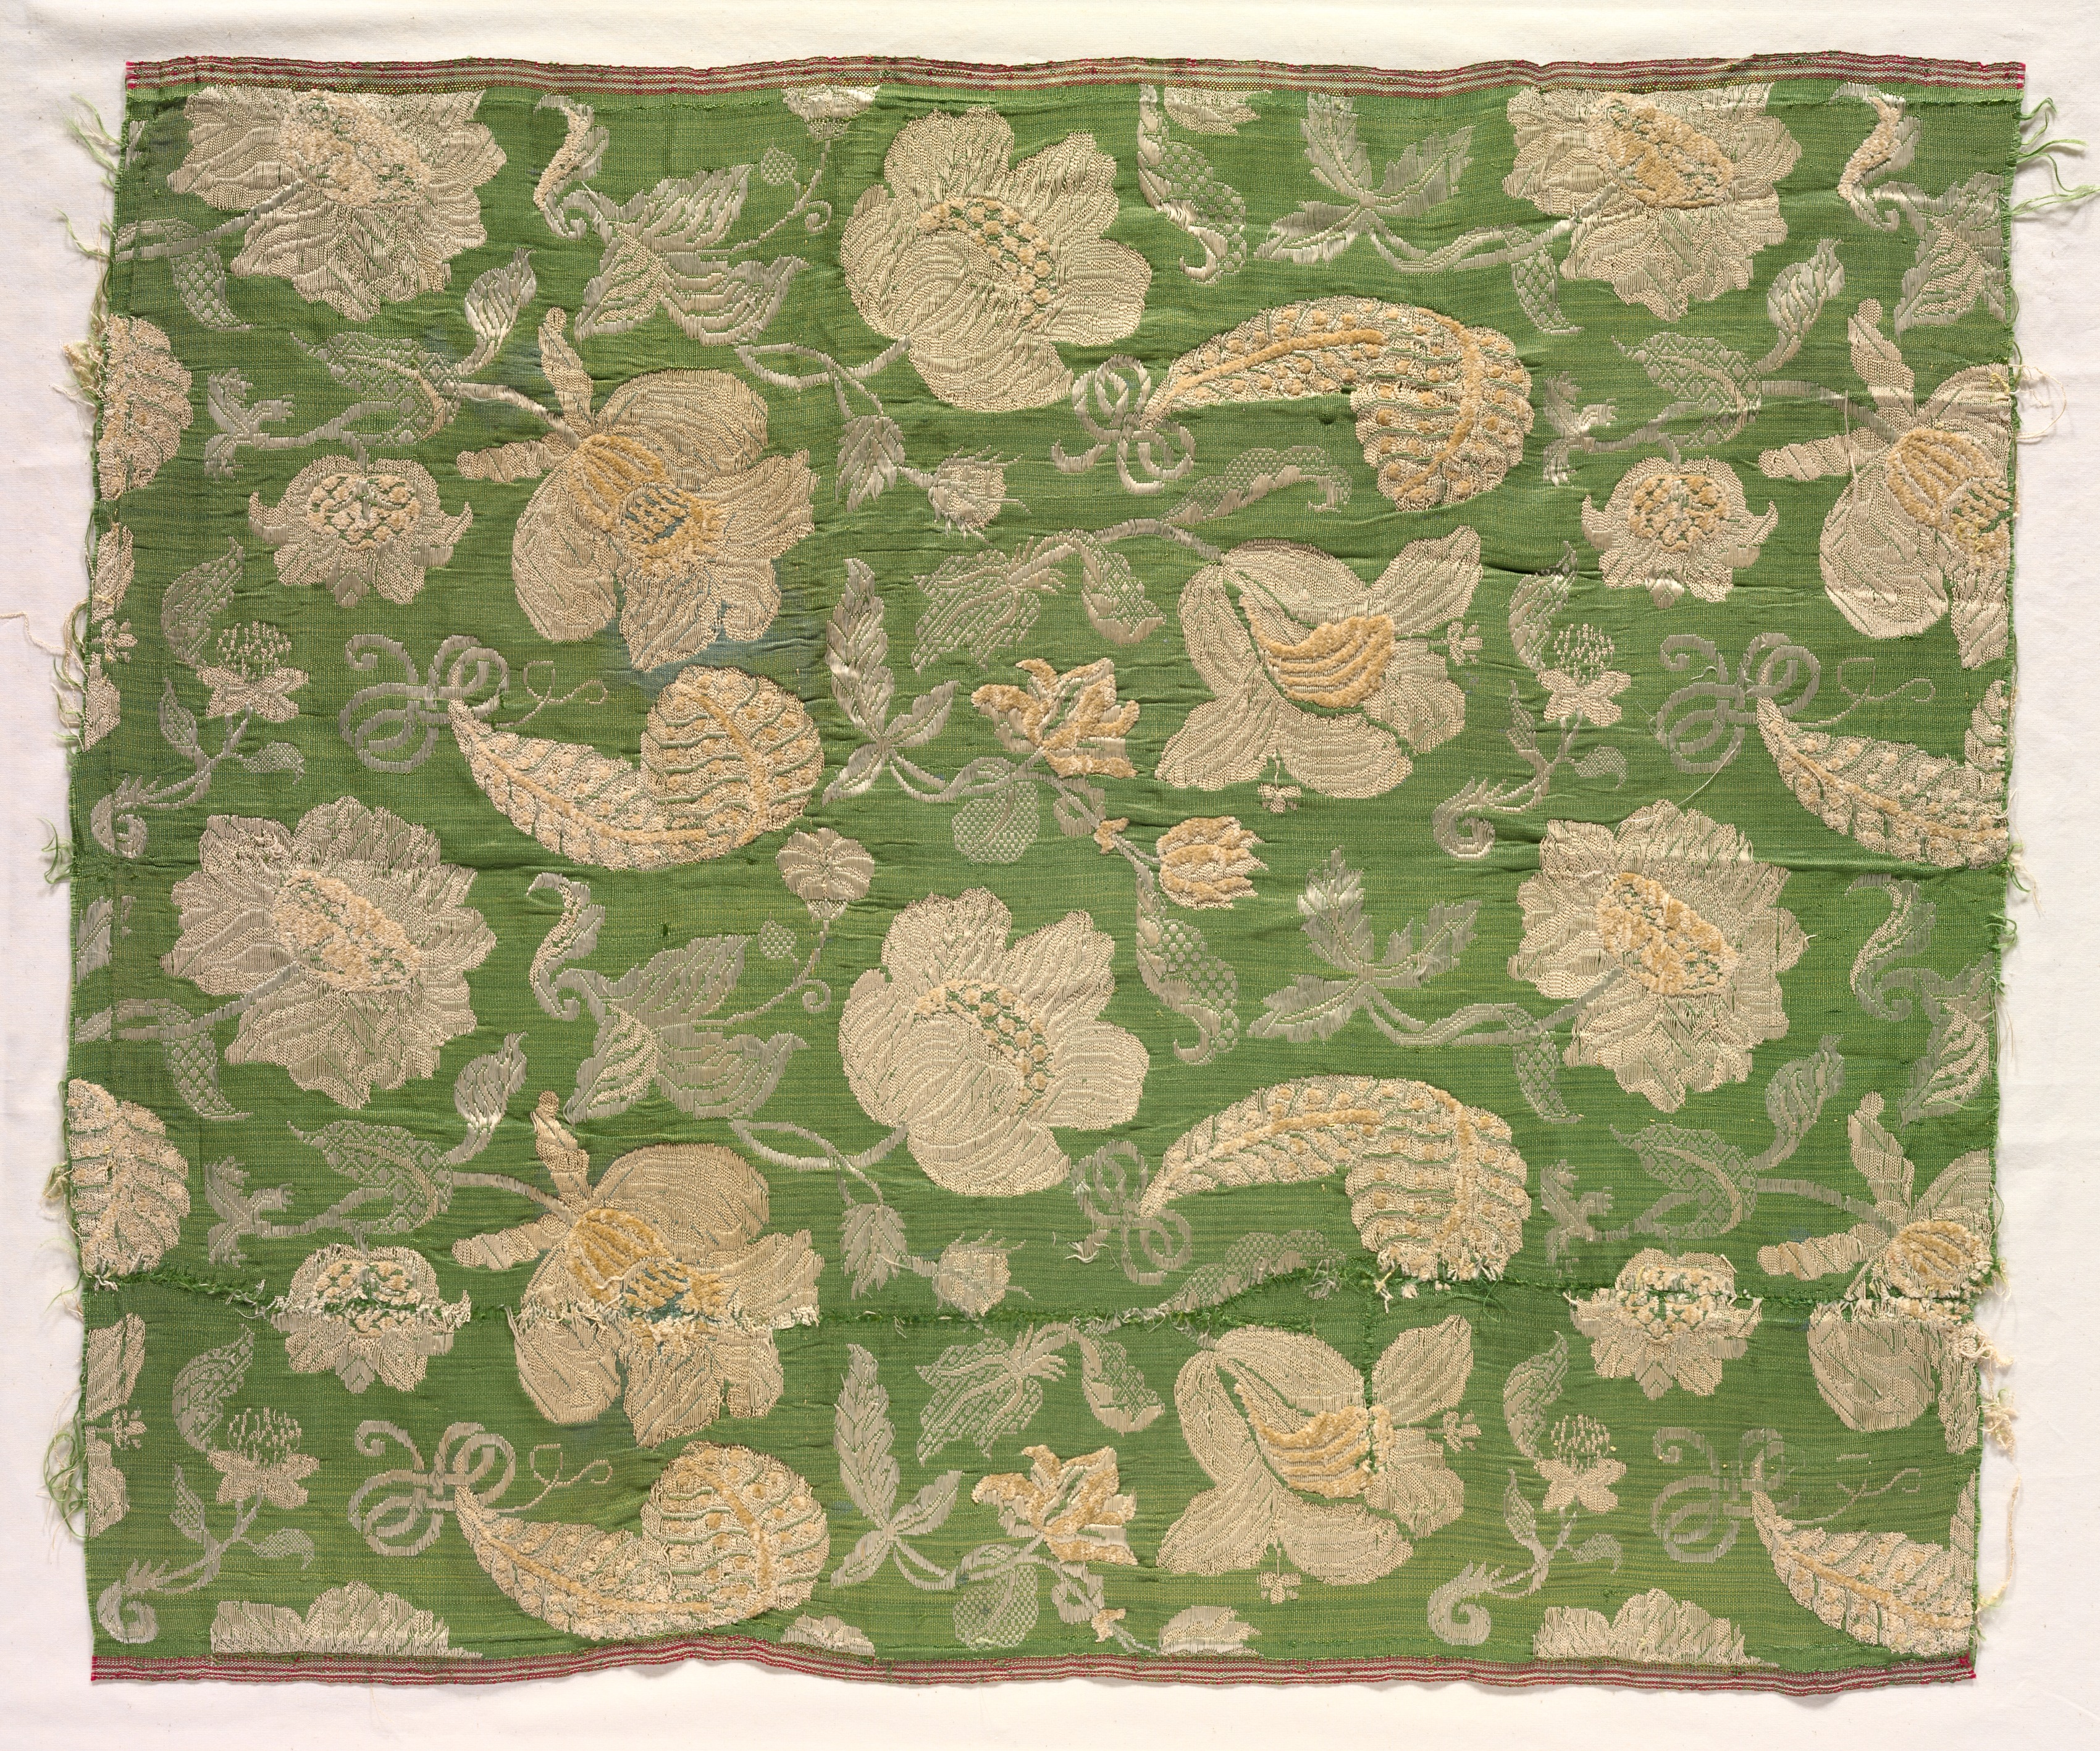 Fragments of Silk Textile